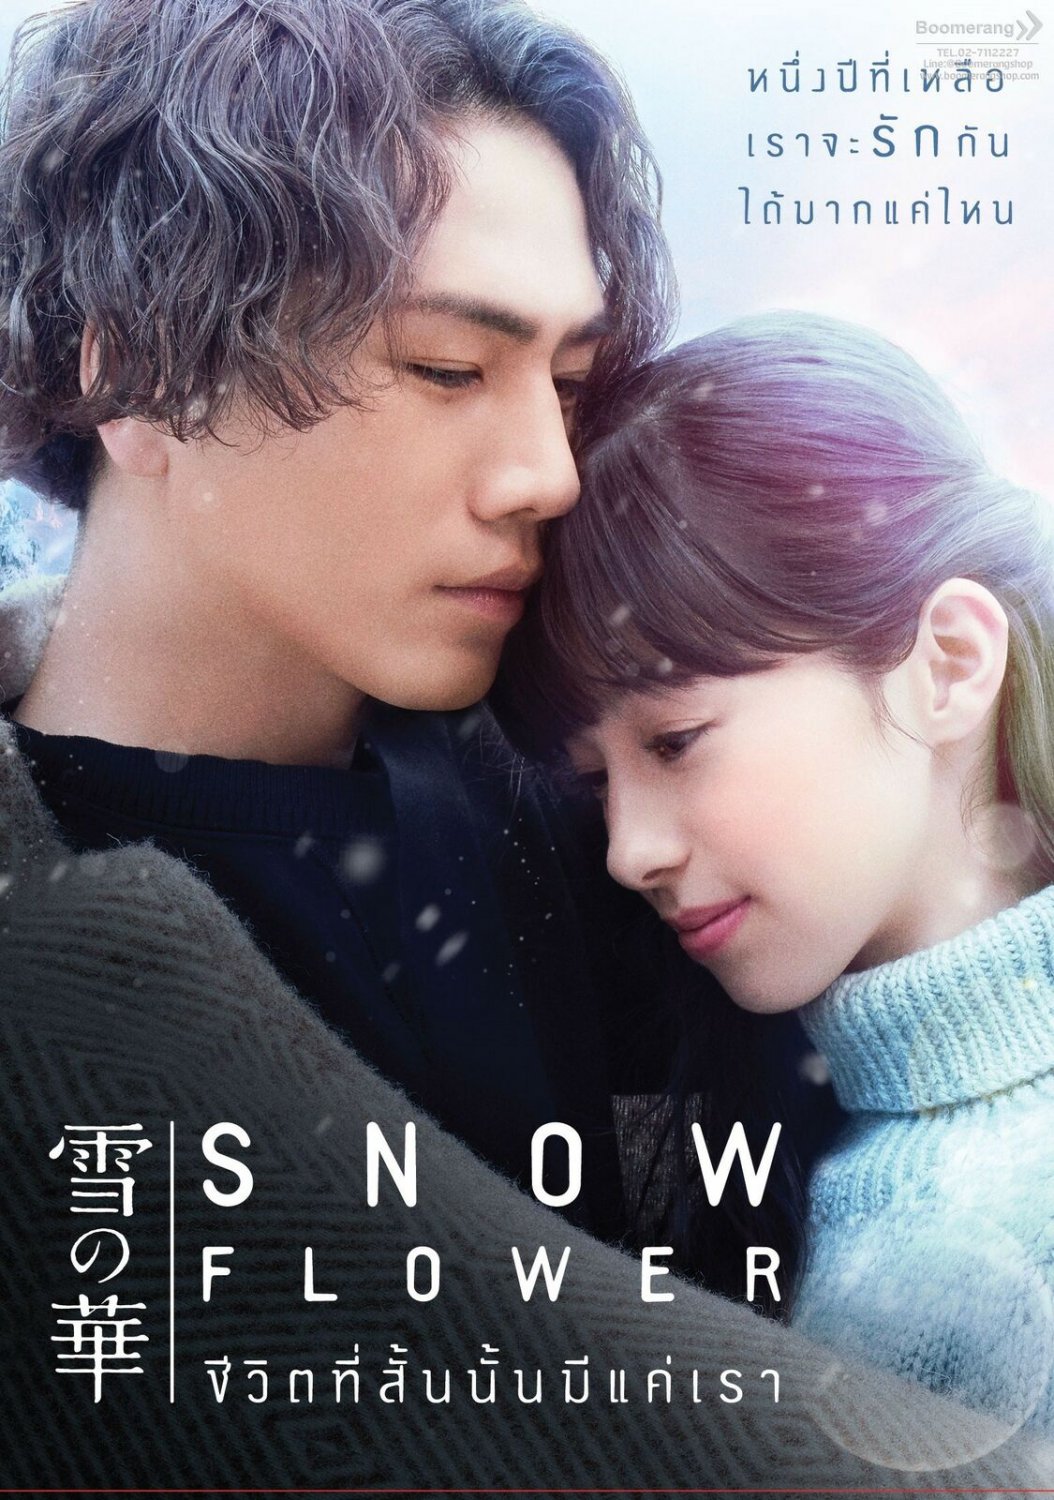 Snow Flower Japanese Movie - Film DVD -English Subtitles (NTSC)